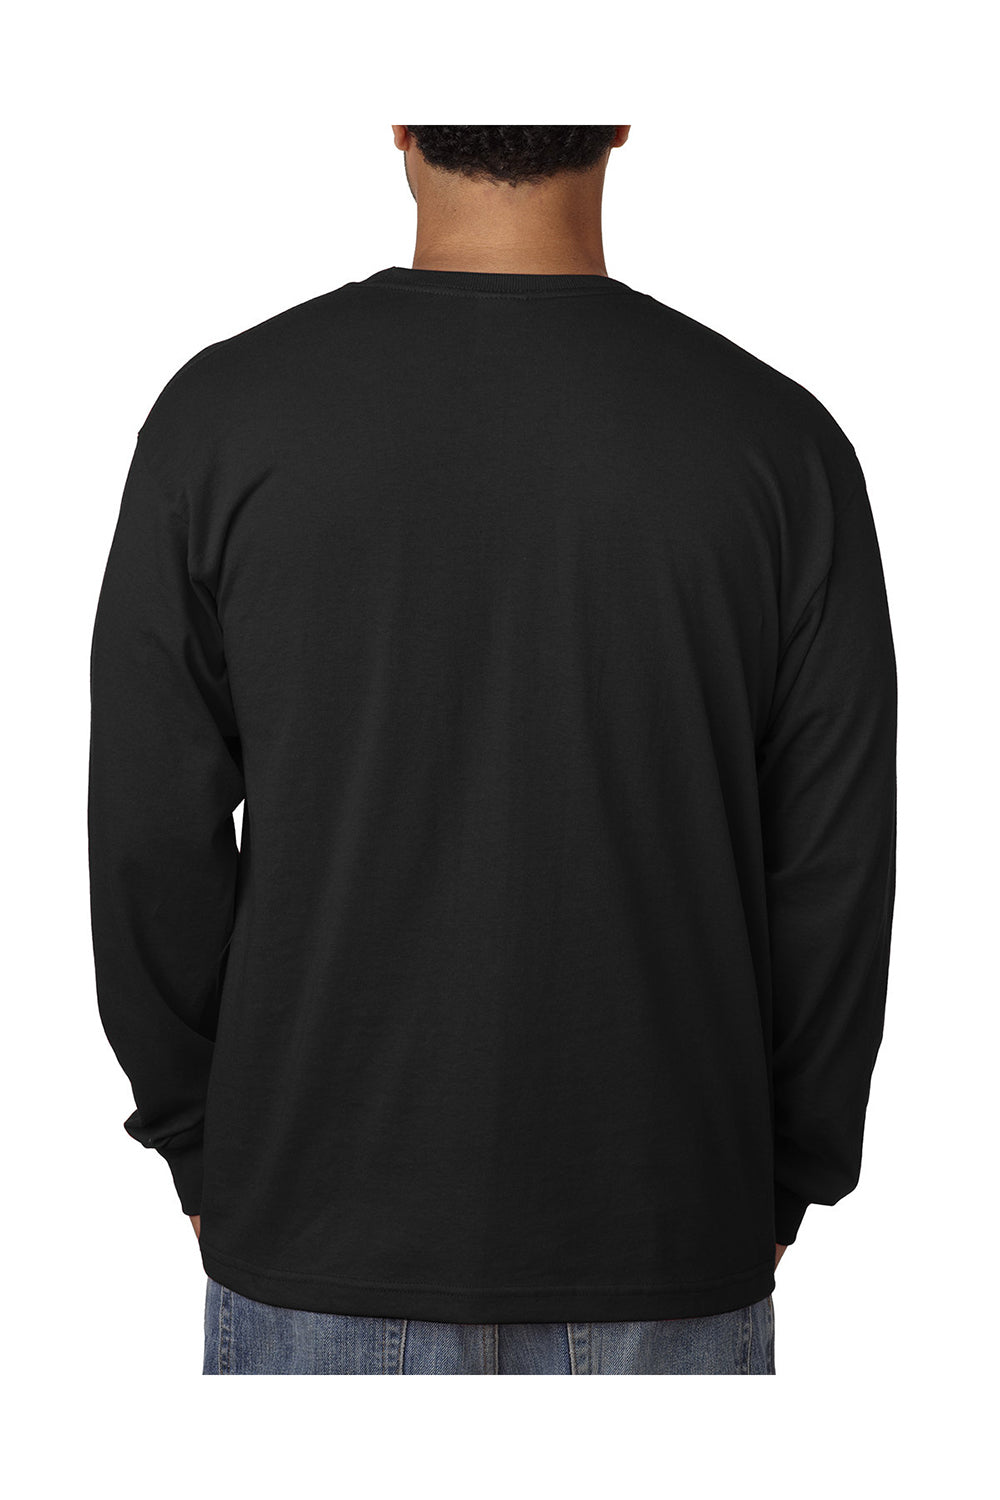 Bayside BA5060 Mens USA Made Long Sleeve Crewneck T-Shirt Black Model Back